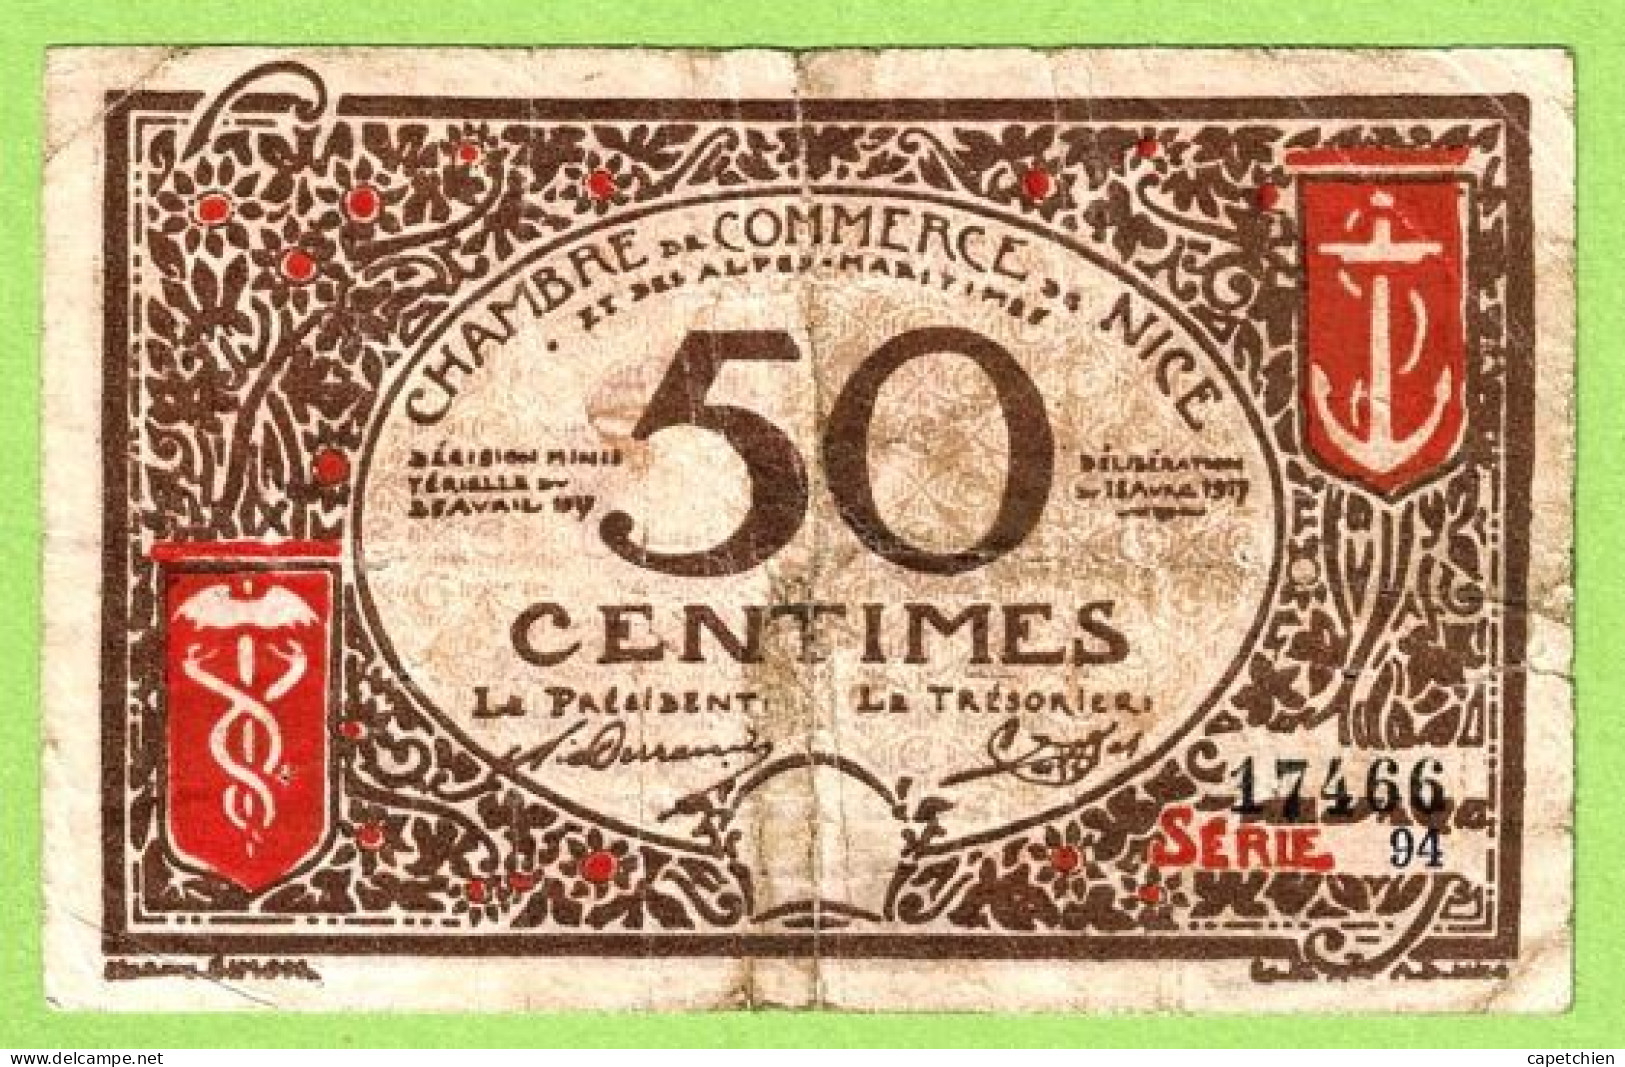 FRANCE / CHAMBRE De COMMERCE / NICE - ALPES MARITIMES / 50 CENTIMES / 1917 - 1921 SURCHARGE 1920 - 1921 / N° 17466 - Handelskammer